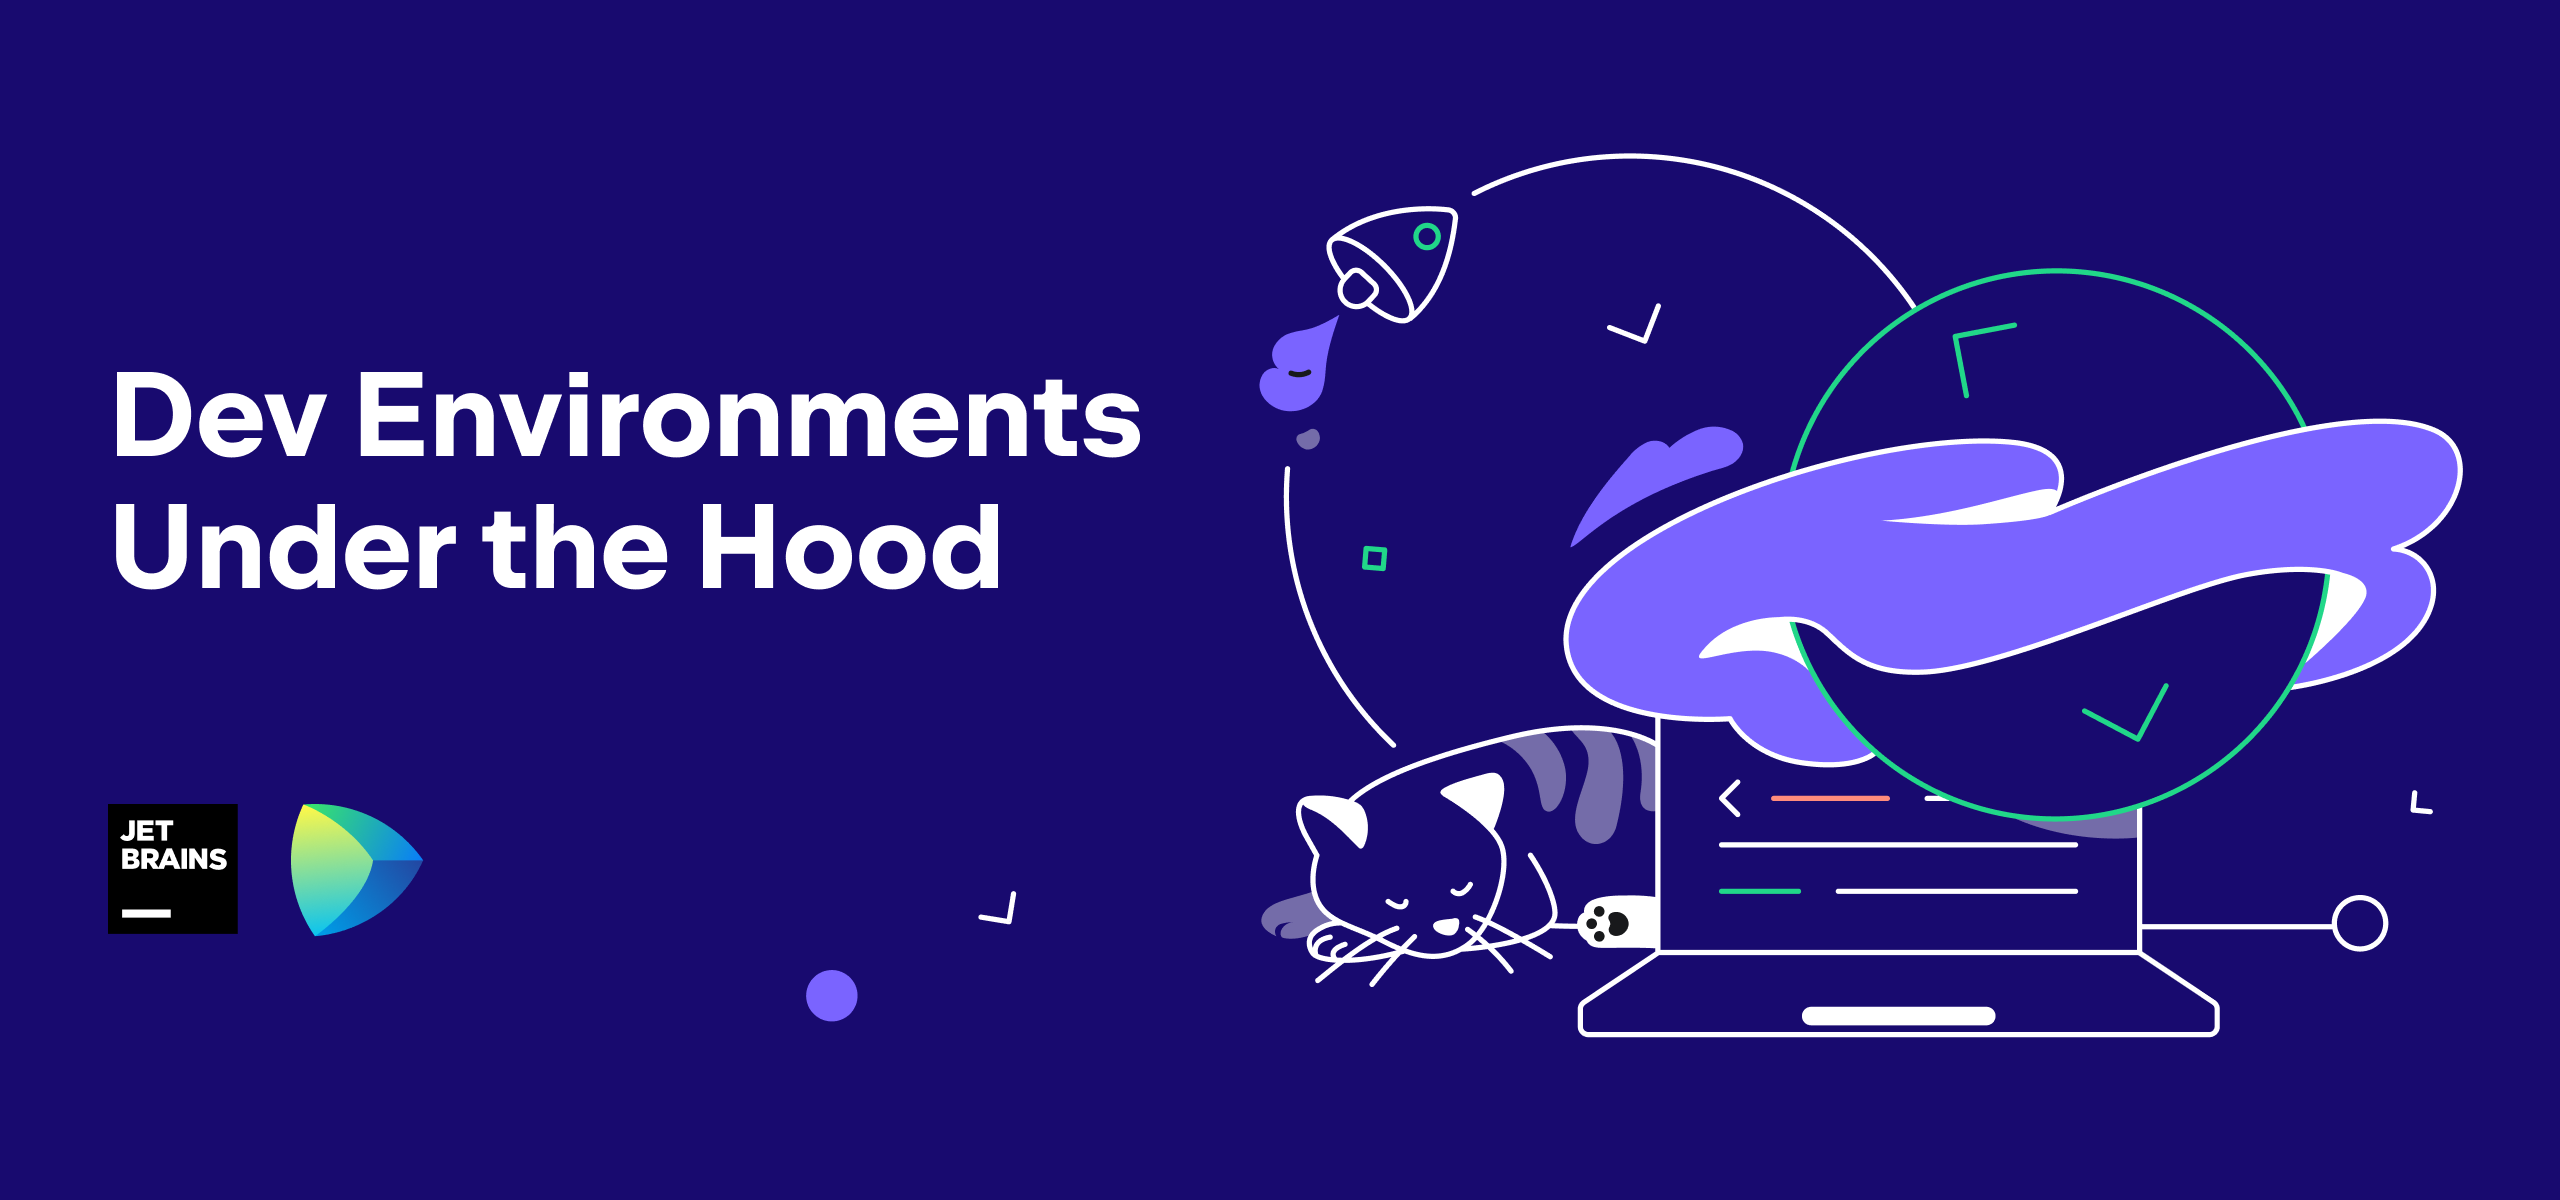 Dev Environments under the hood